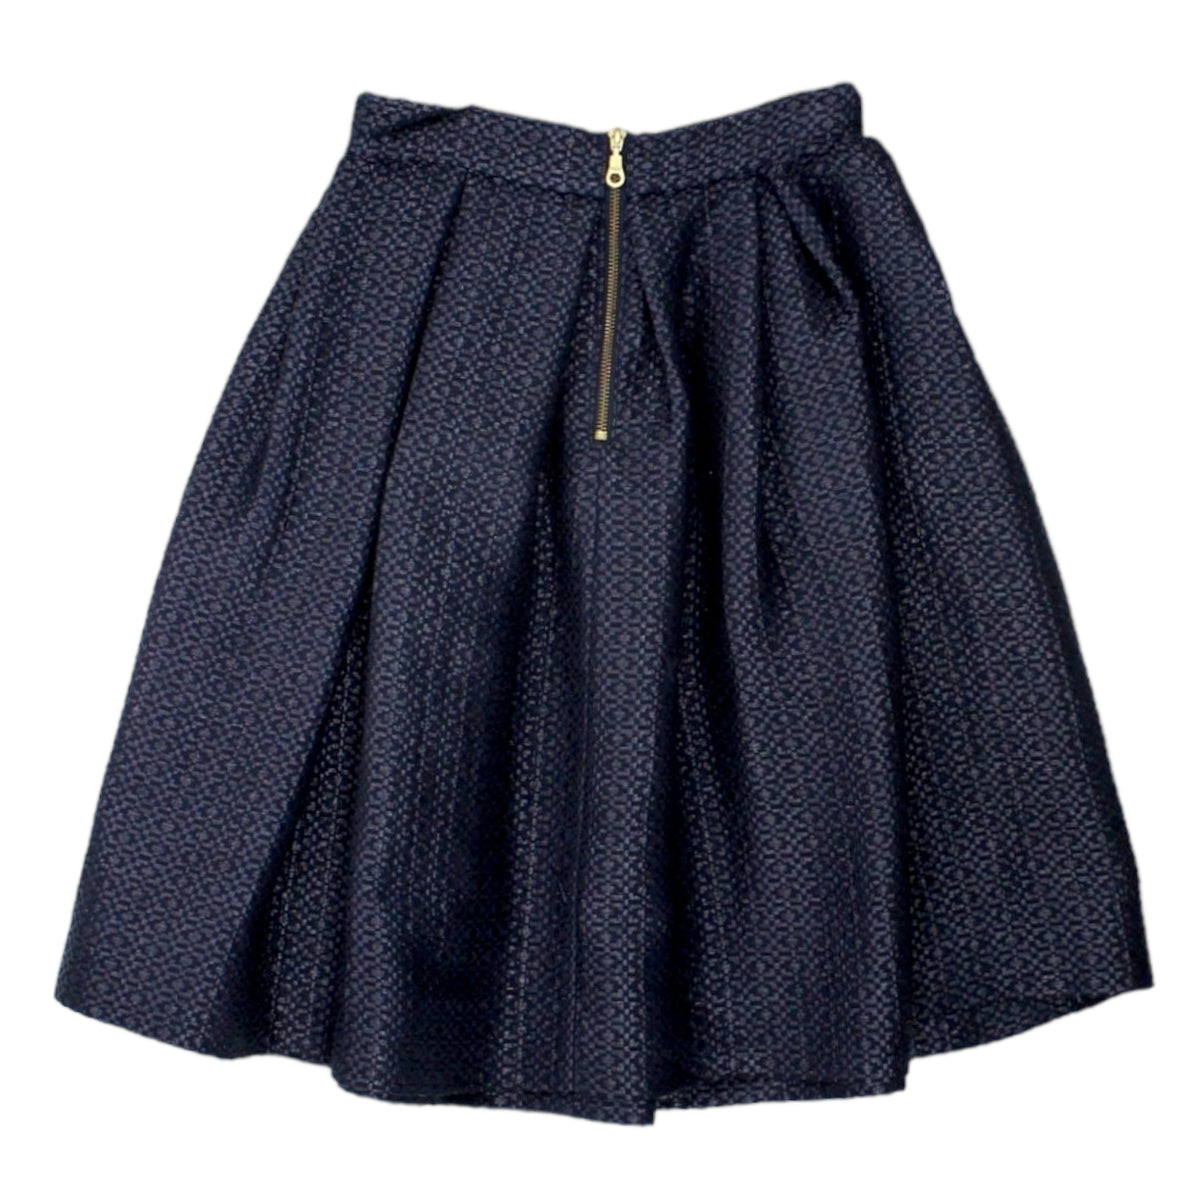 Orla Kiely Navy Brocade Pleated Skirt